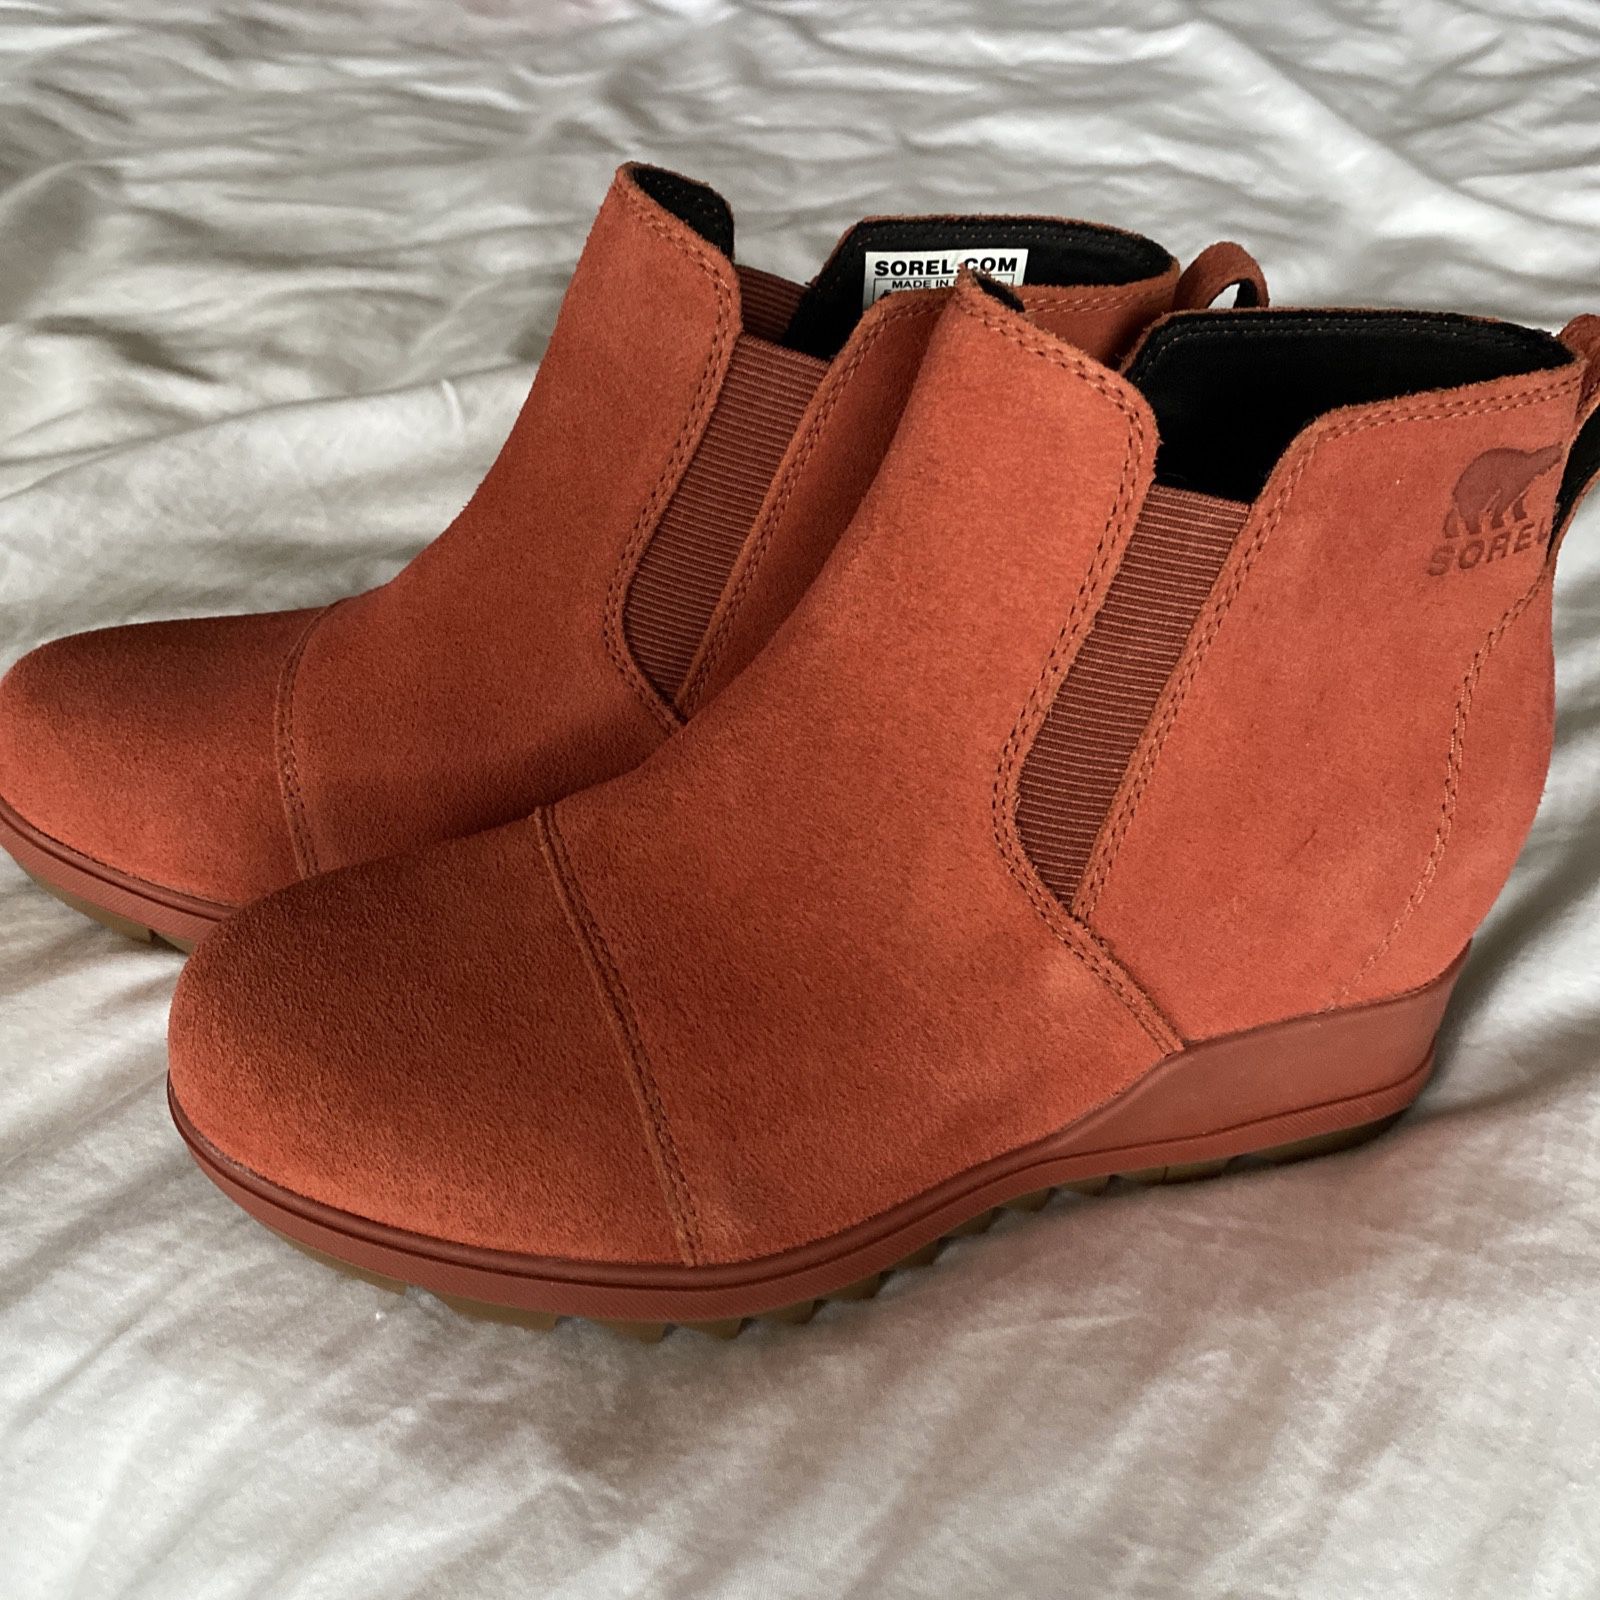 NEW Sorel Evie Boot Size 7.5 Red/orange